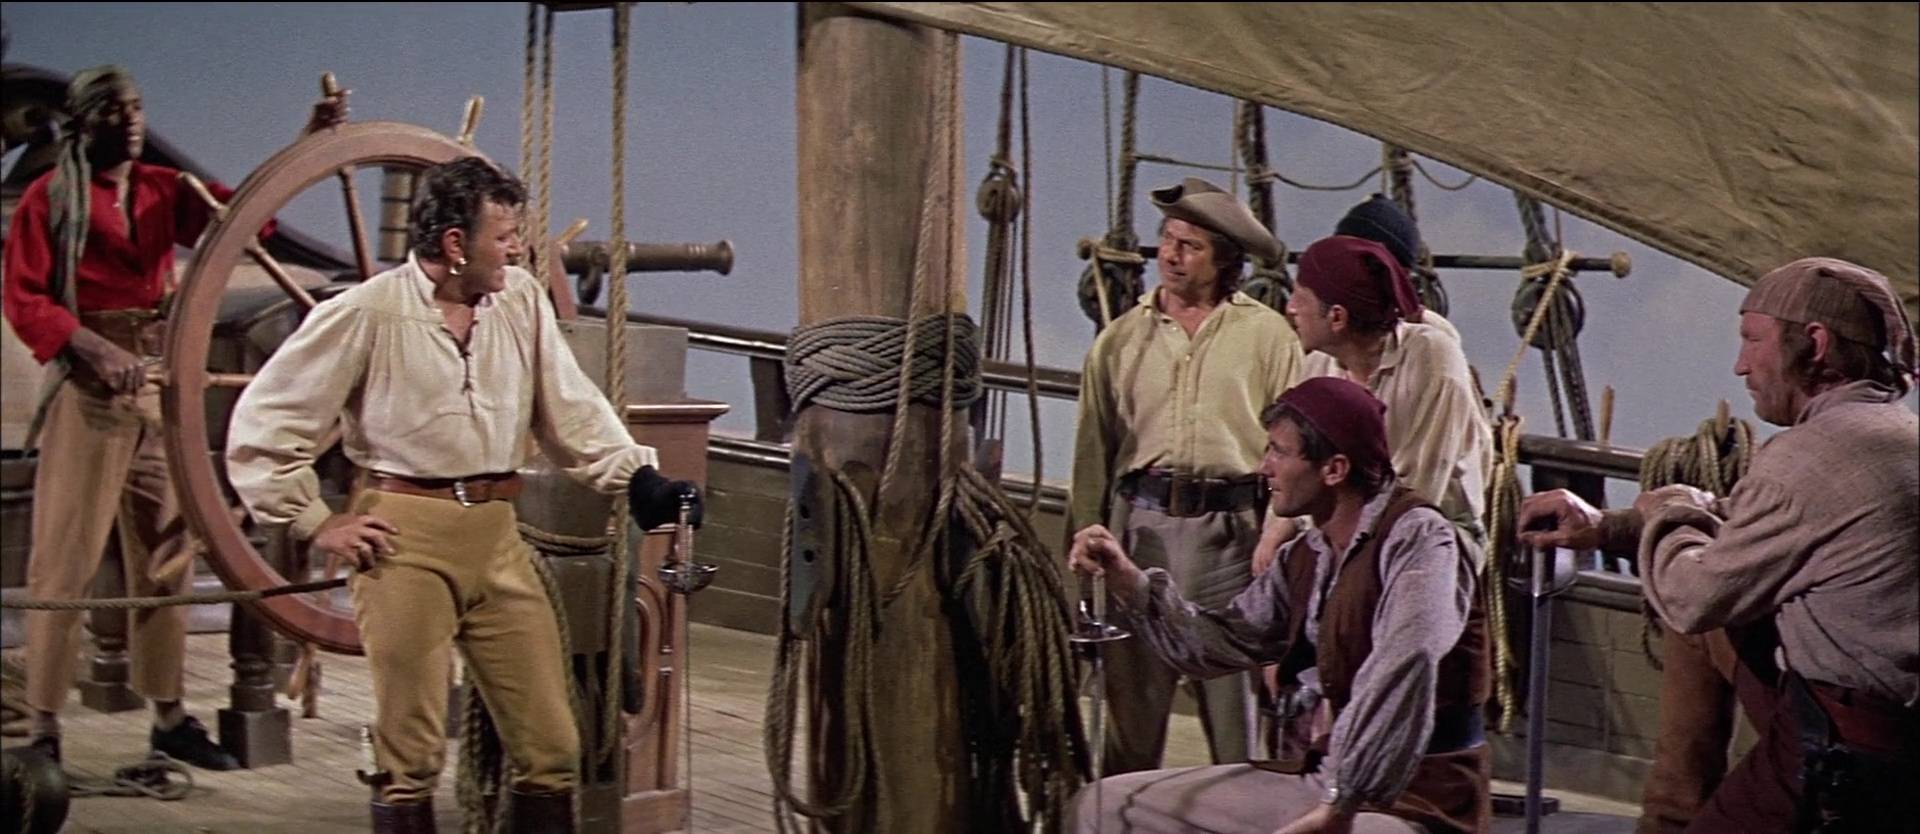 Pirates of Tortuga (1961)